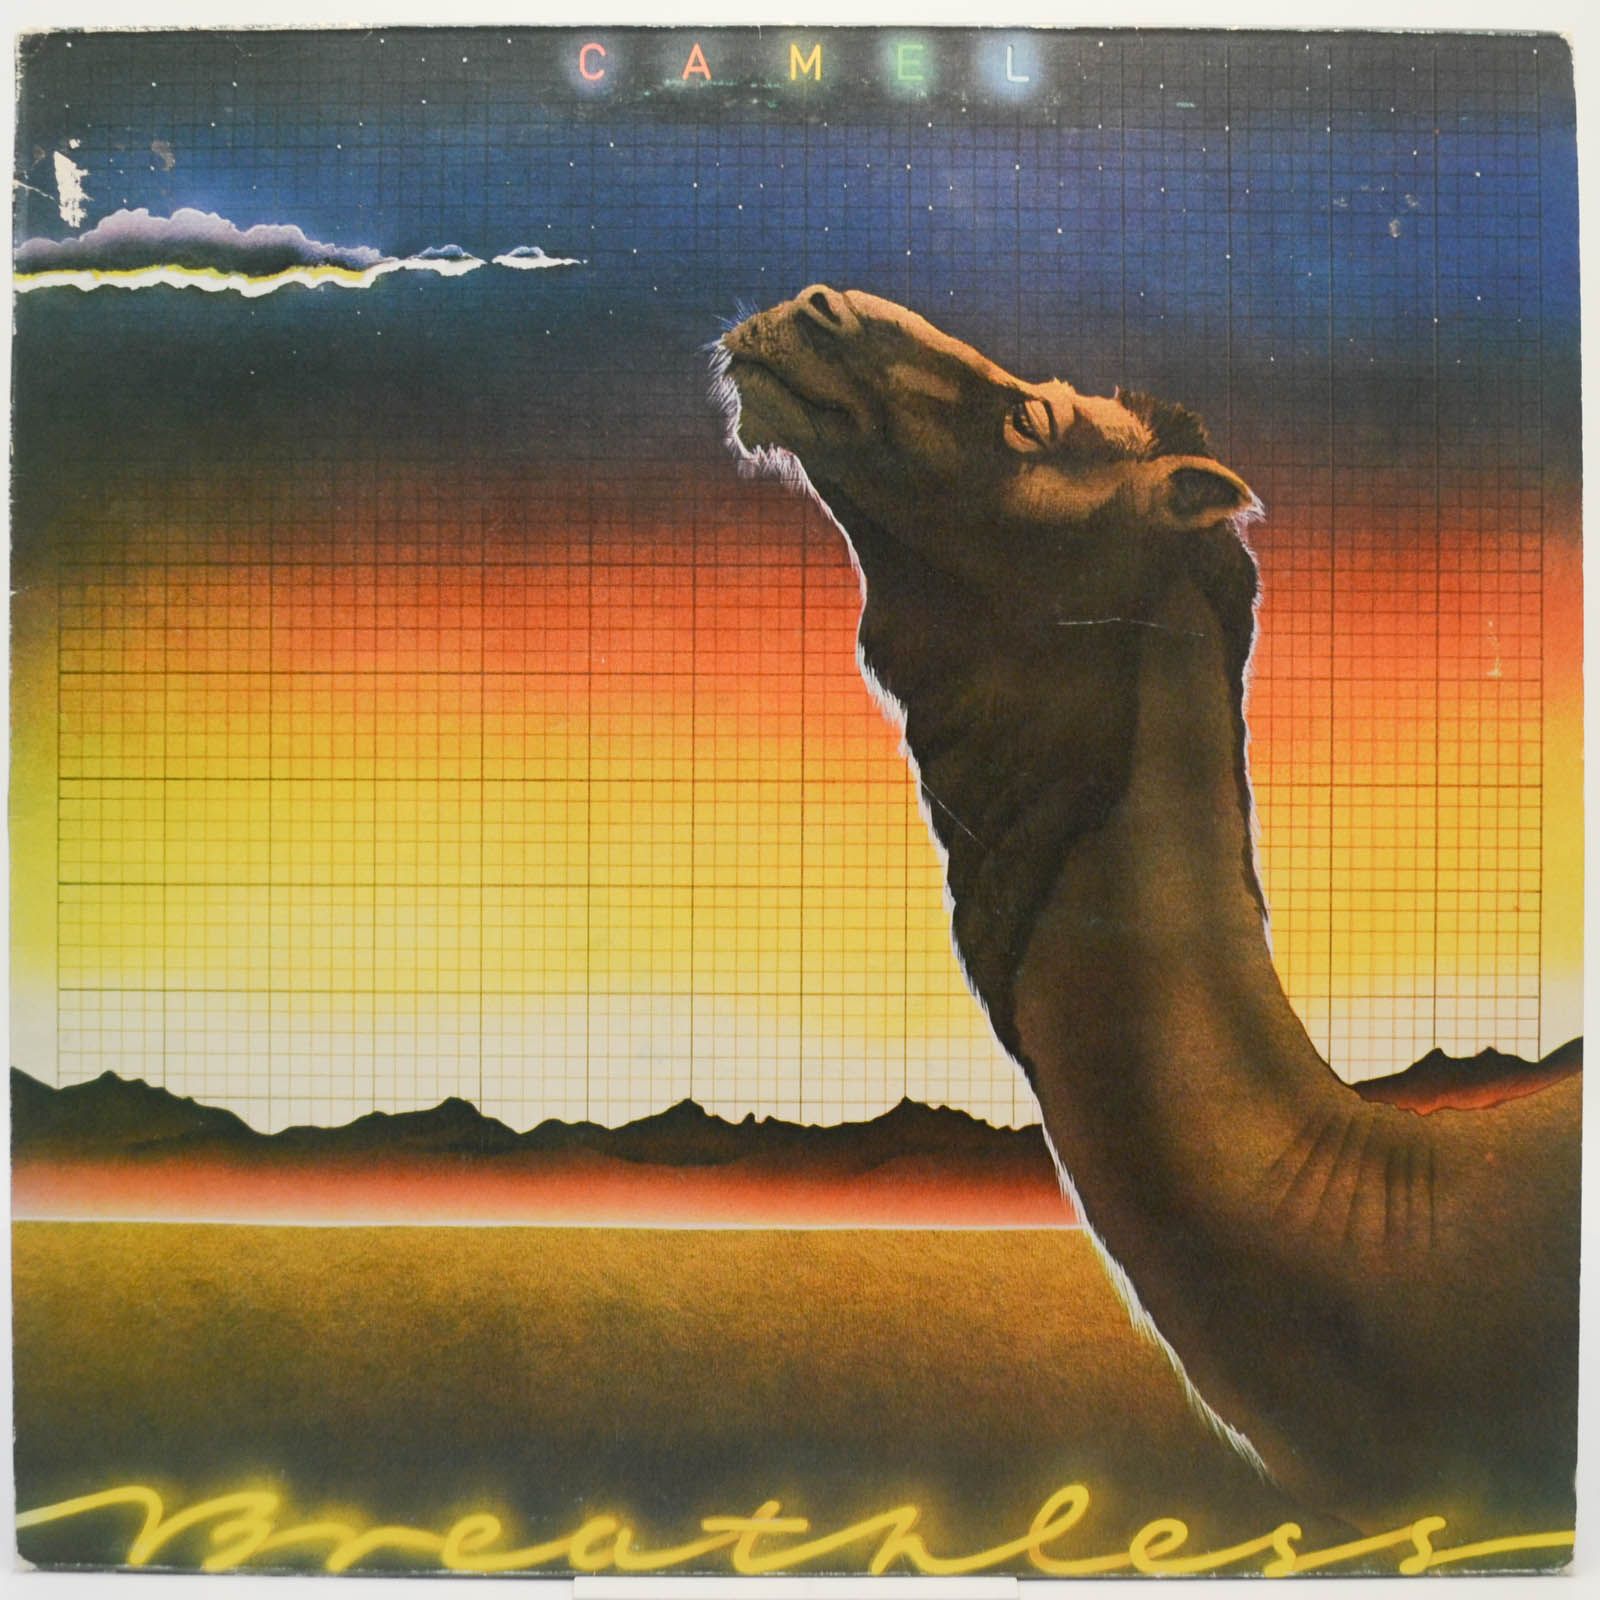 Camel — Breathless, 1978